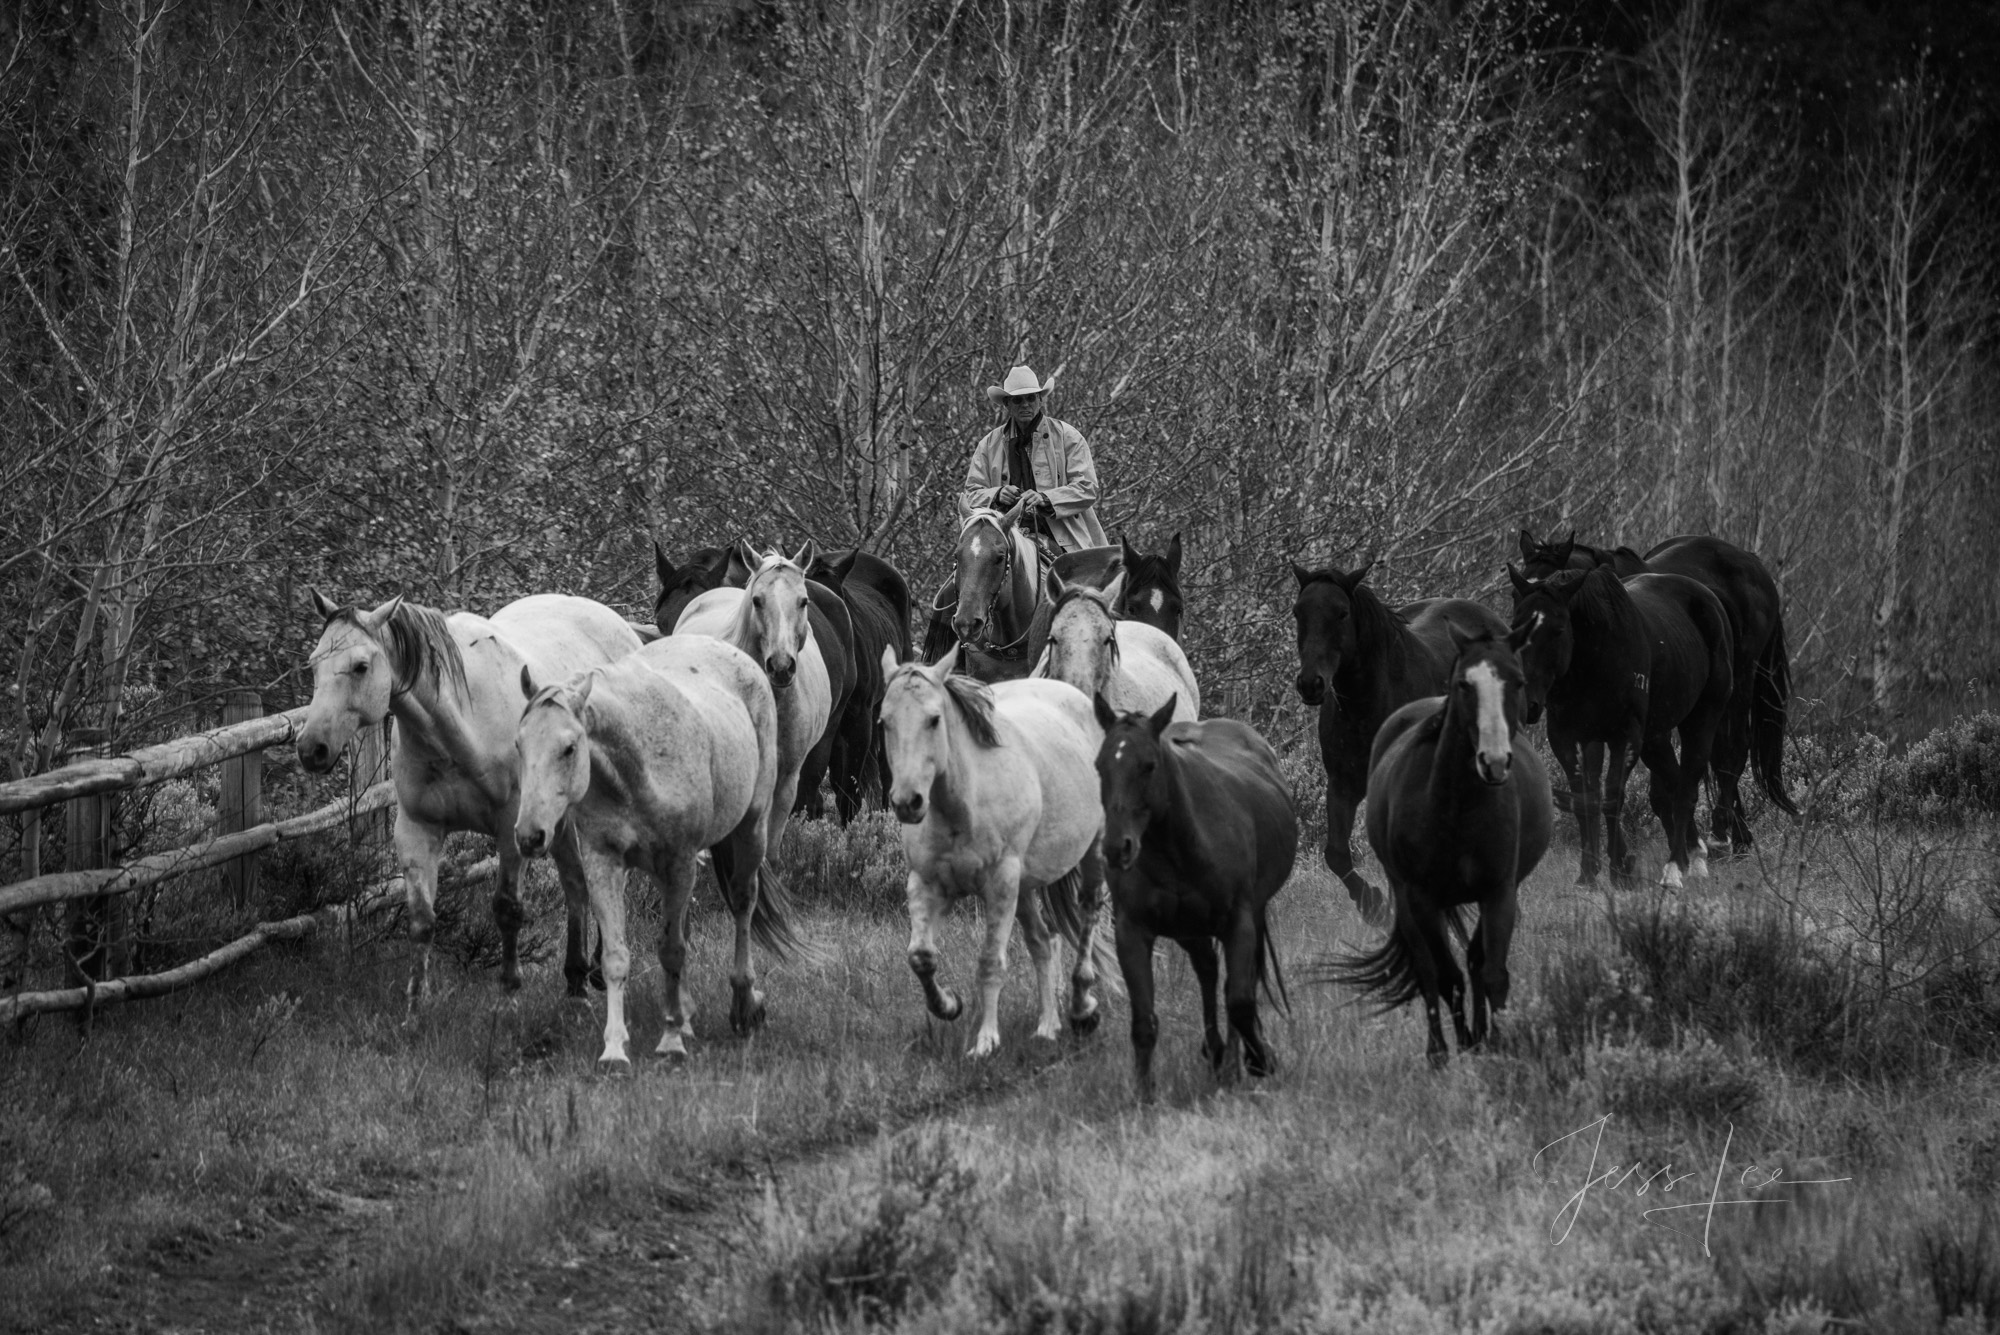 Cowboy on Horseback herding horses.